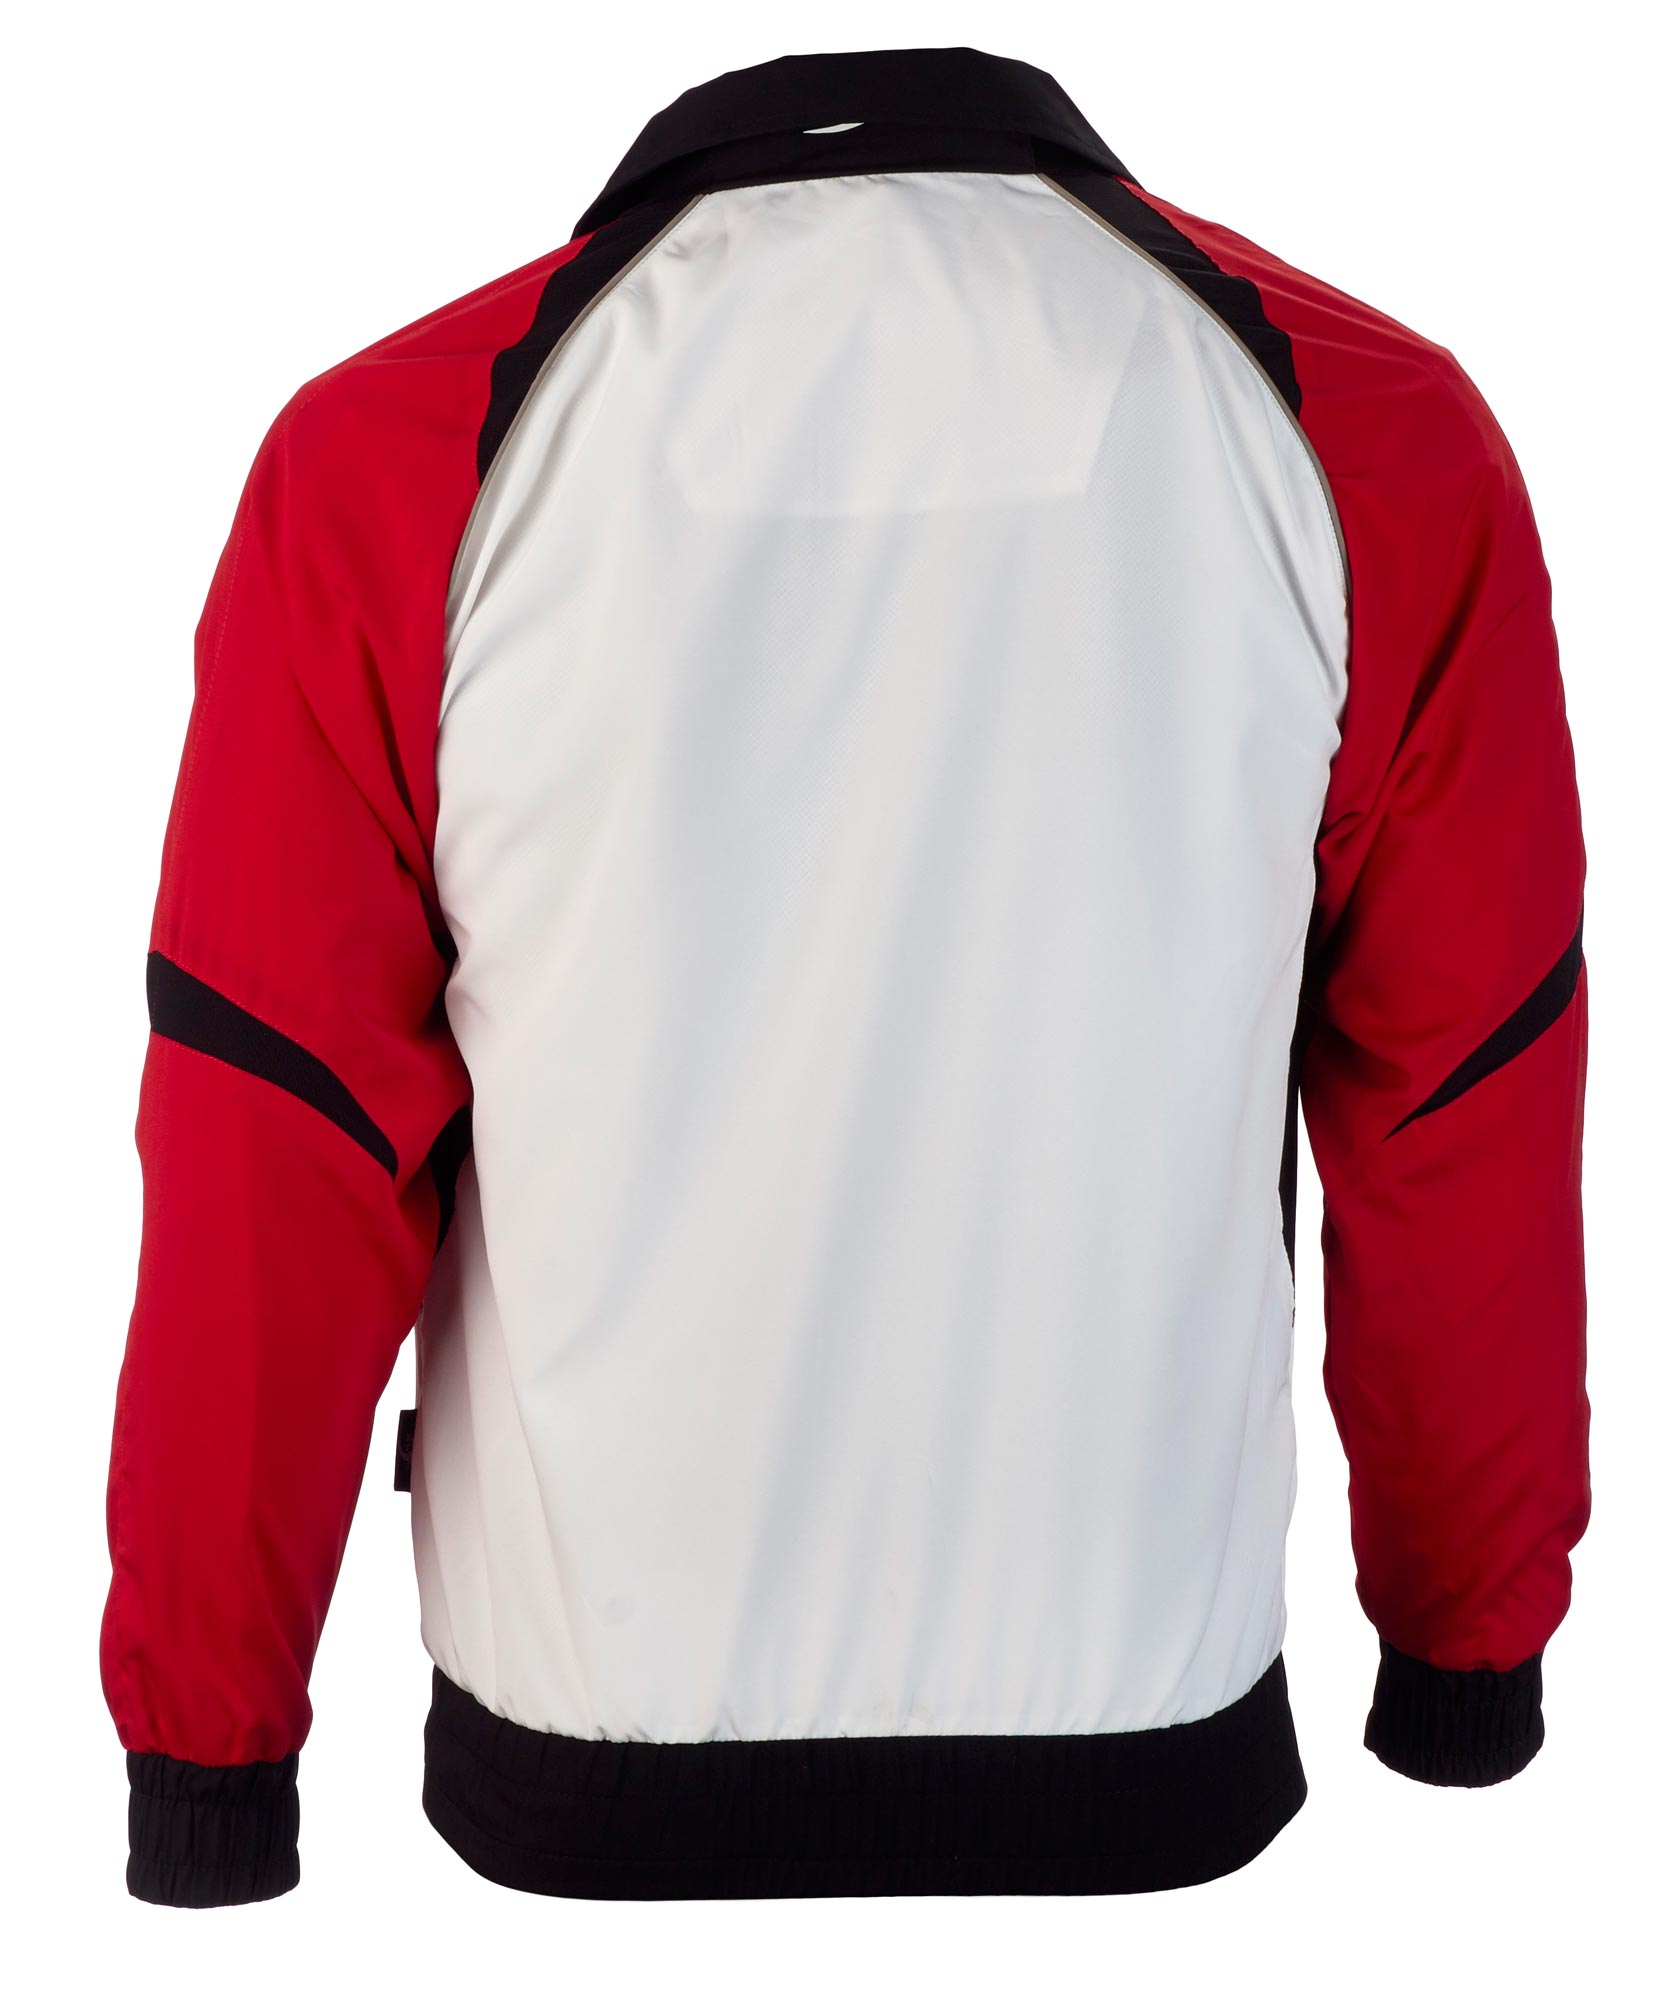 Teamwear Element C2 Jacke weiß/rot